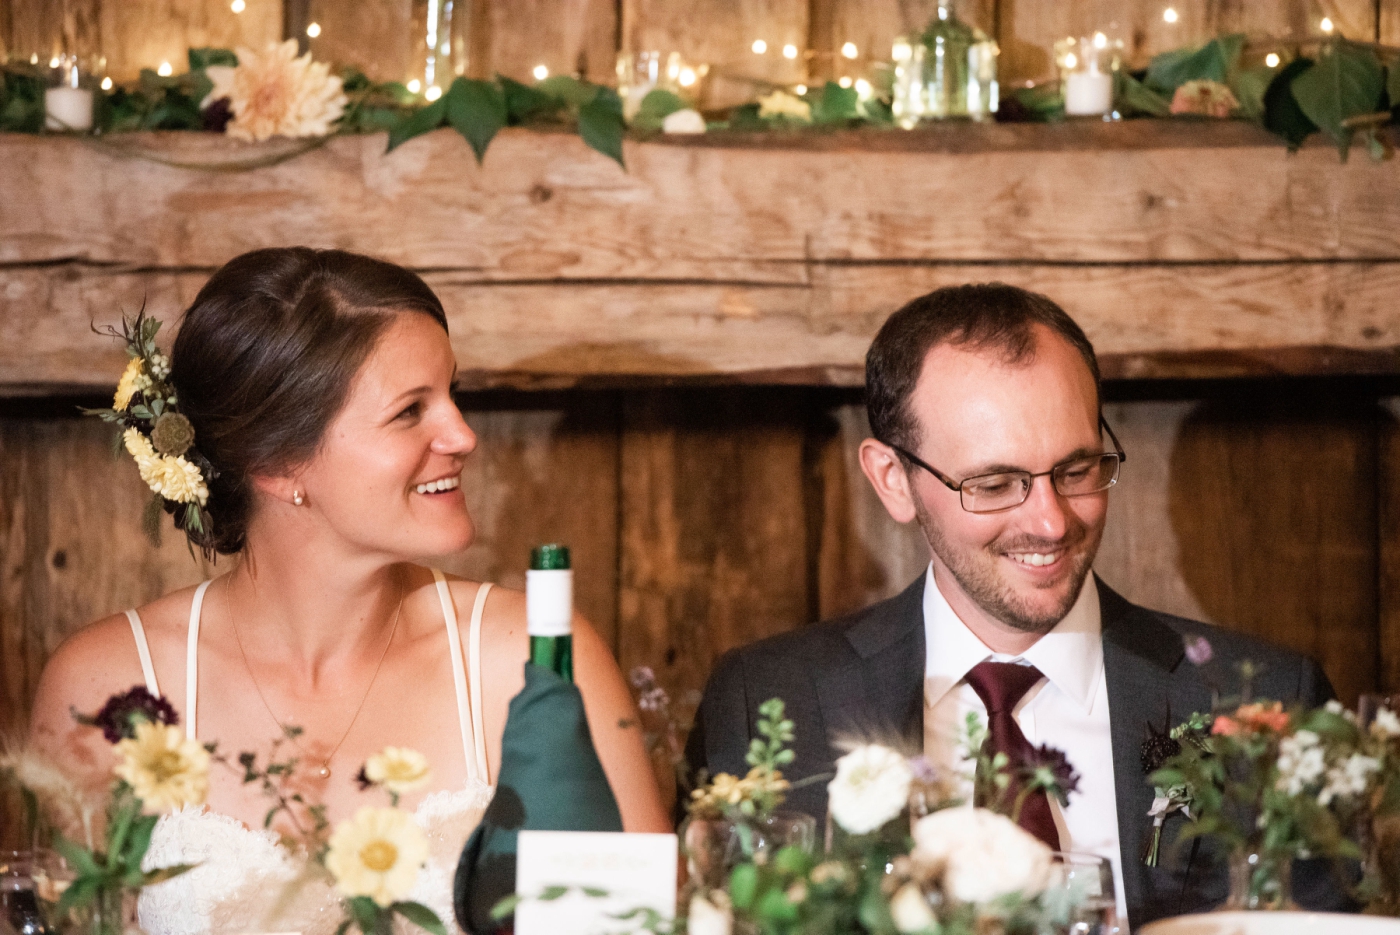 Barn wedding reception by Events By Sorrell